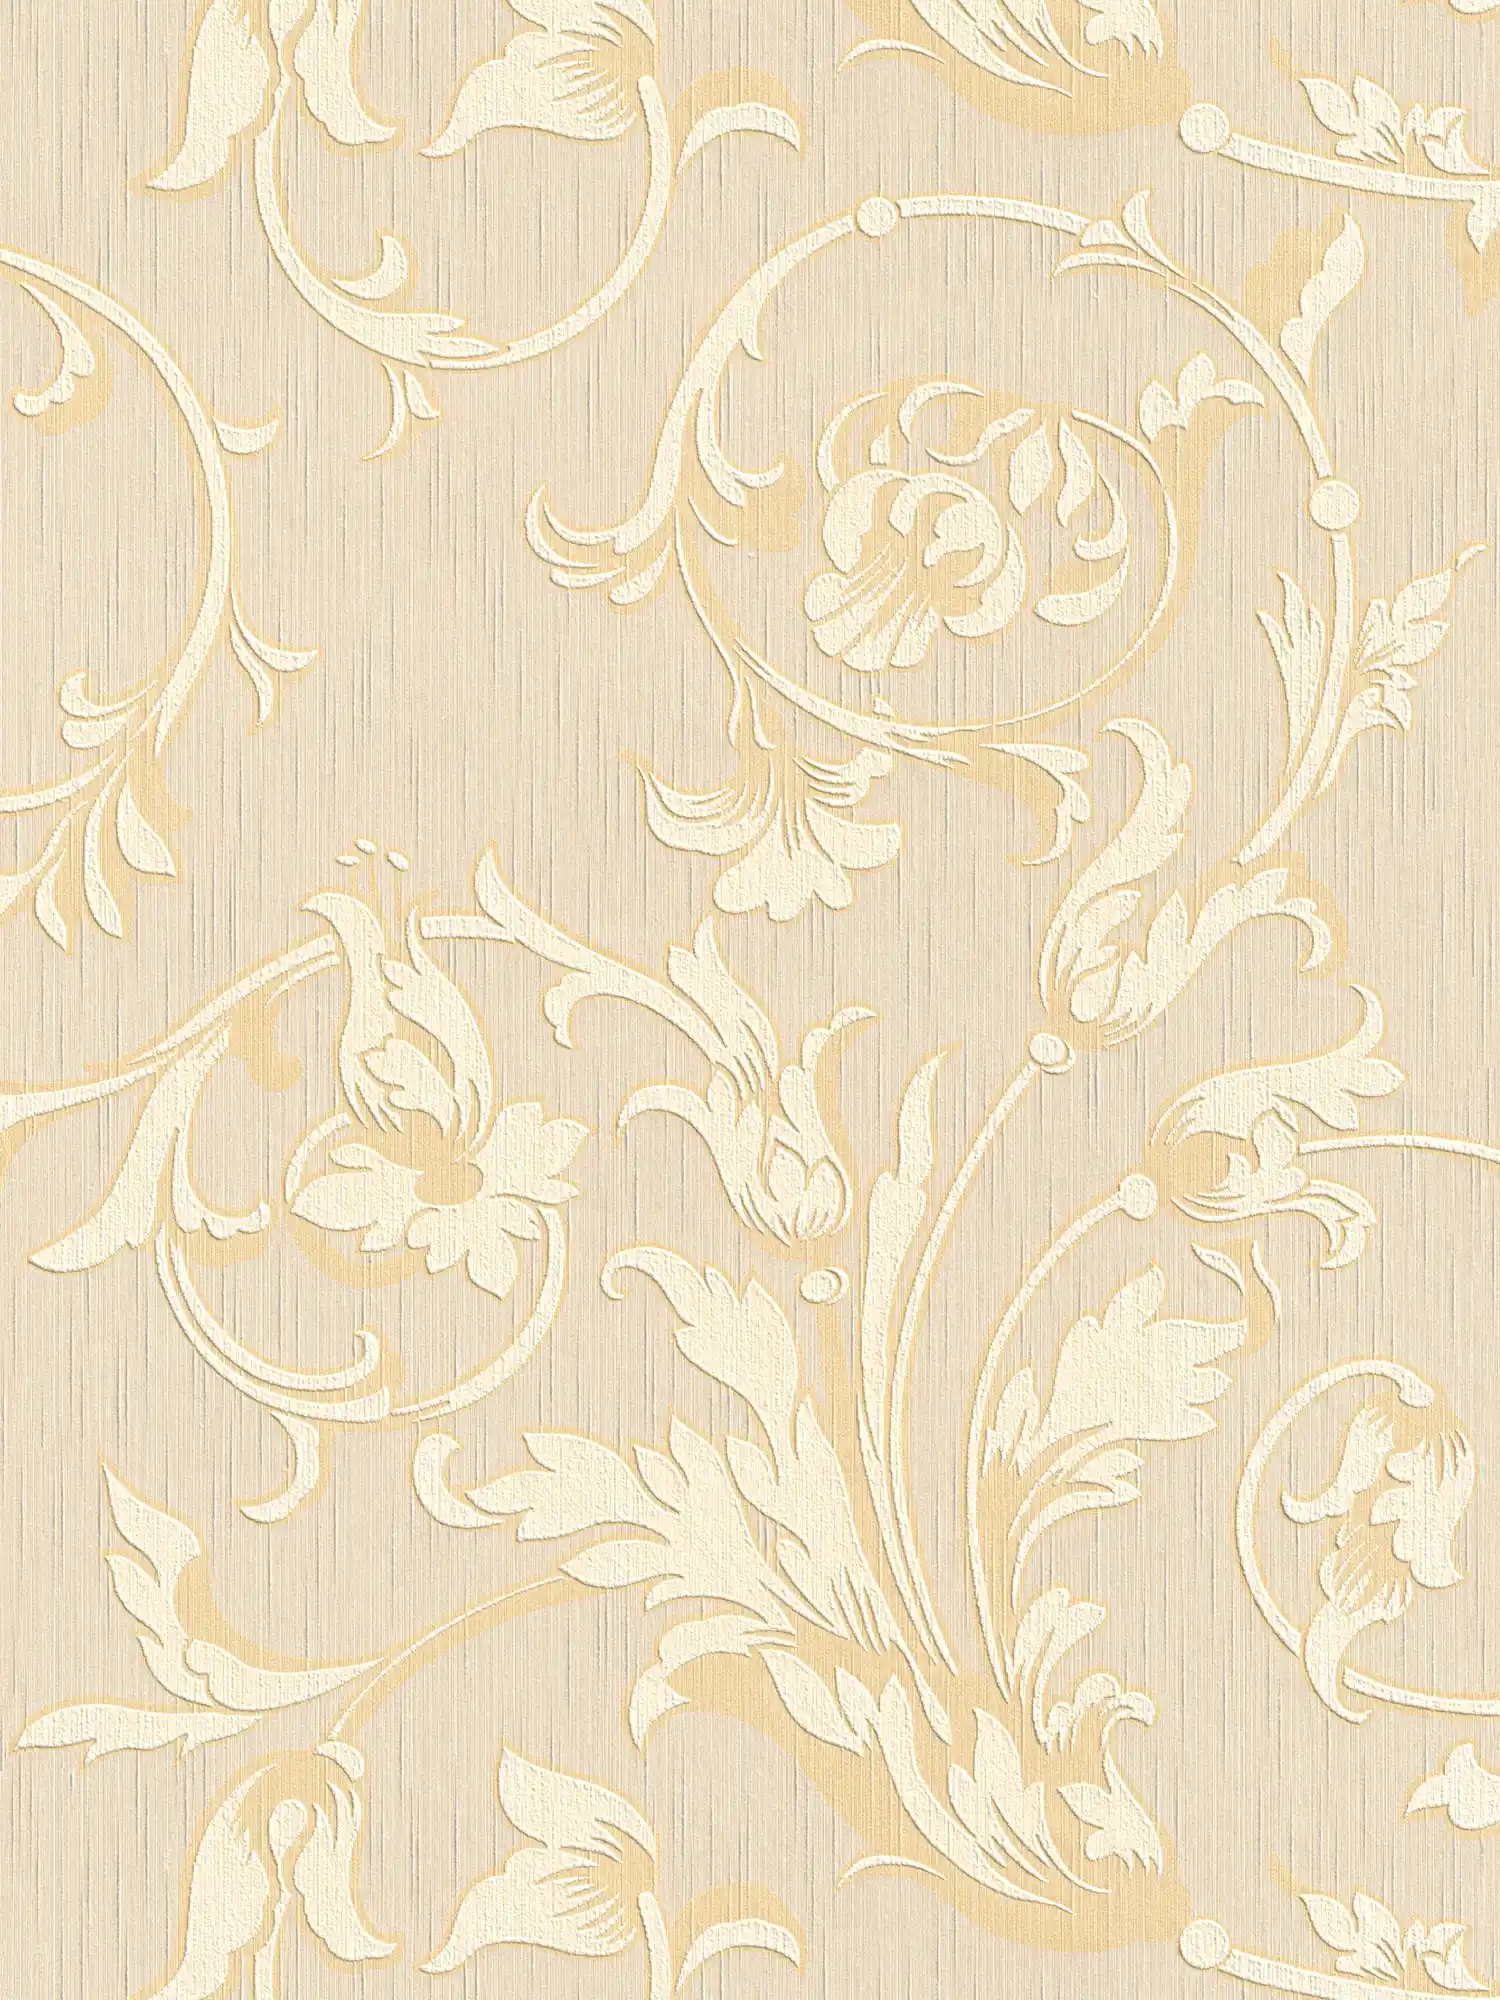 Ornament wallpaper with silk look - cream, gold, beige
